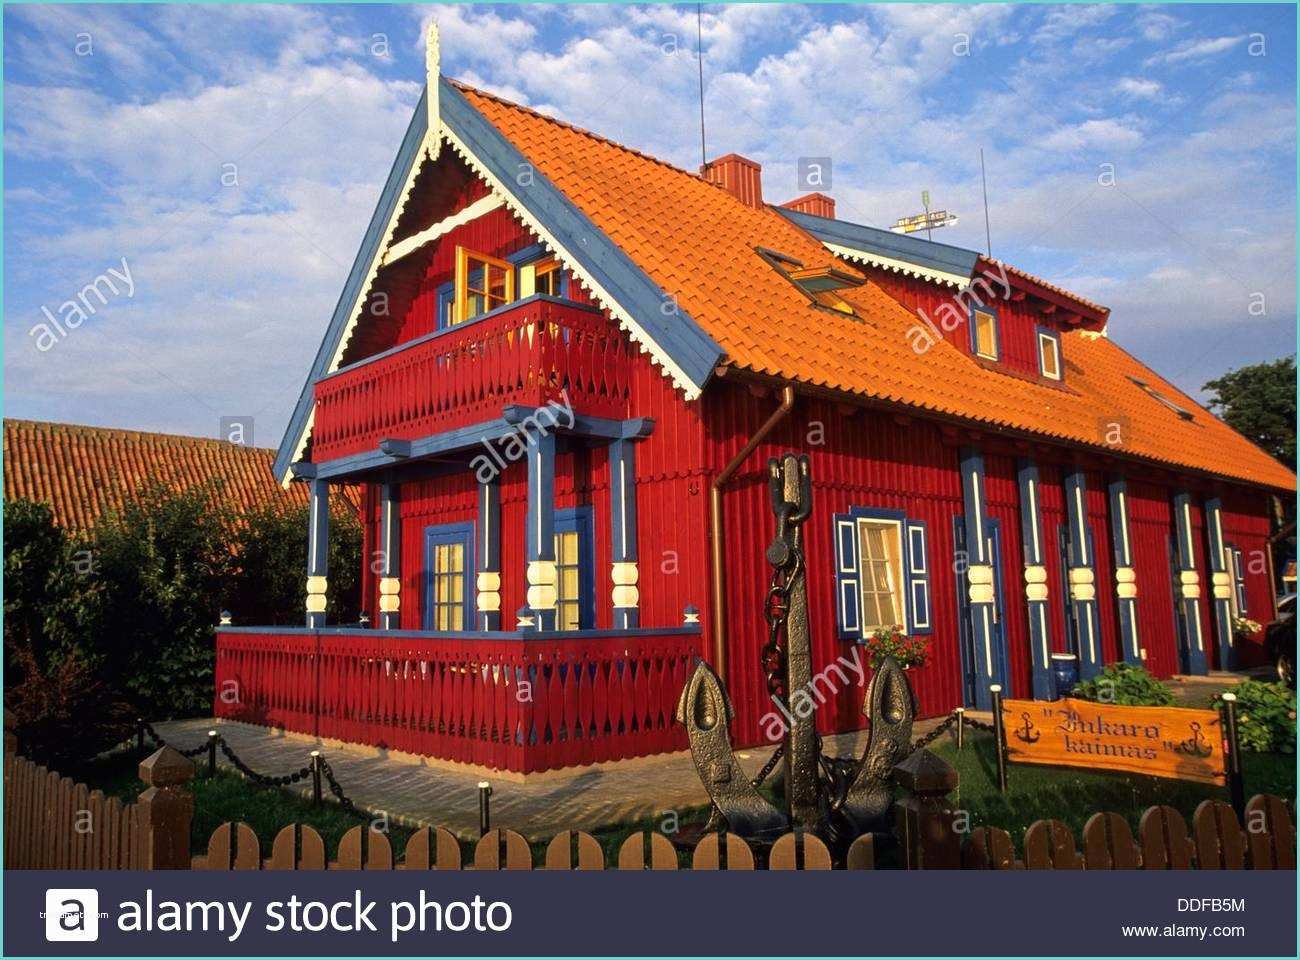 Maison Stock Images Maison De Nida Presqu´ile De Courlande Lituanie Pays